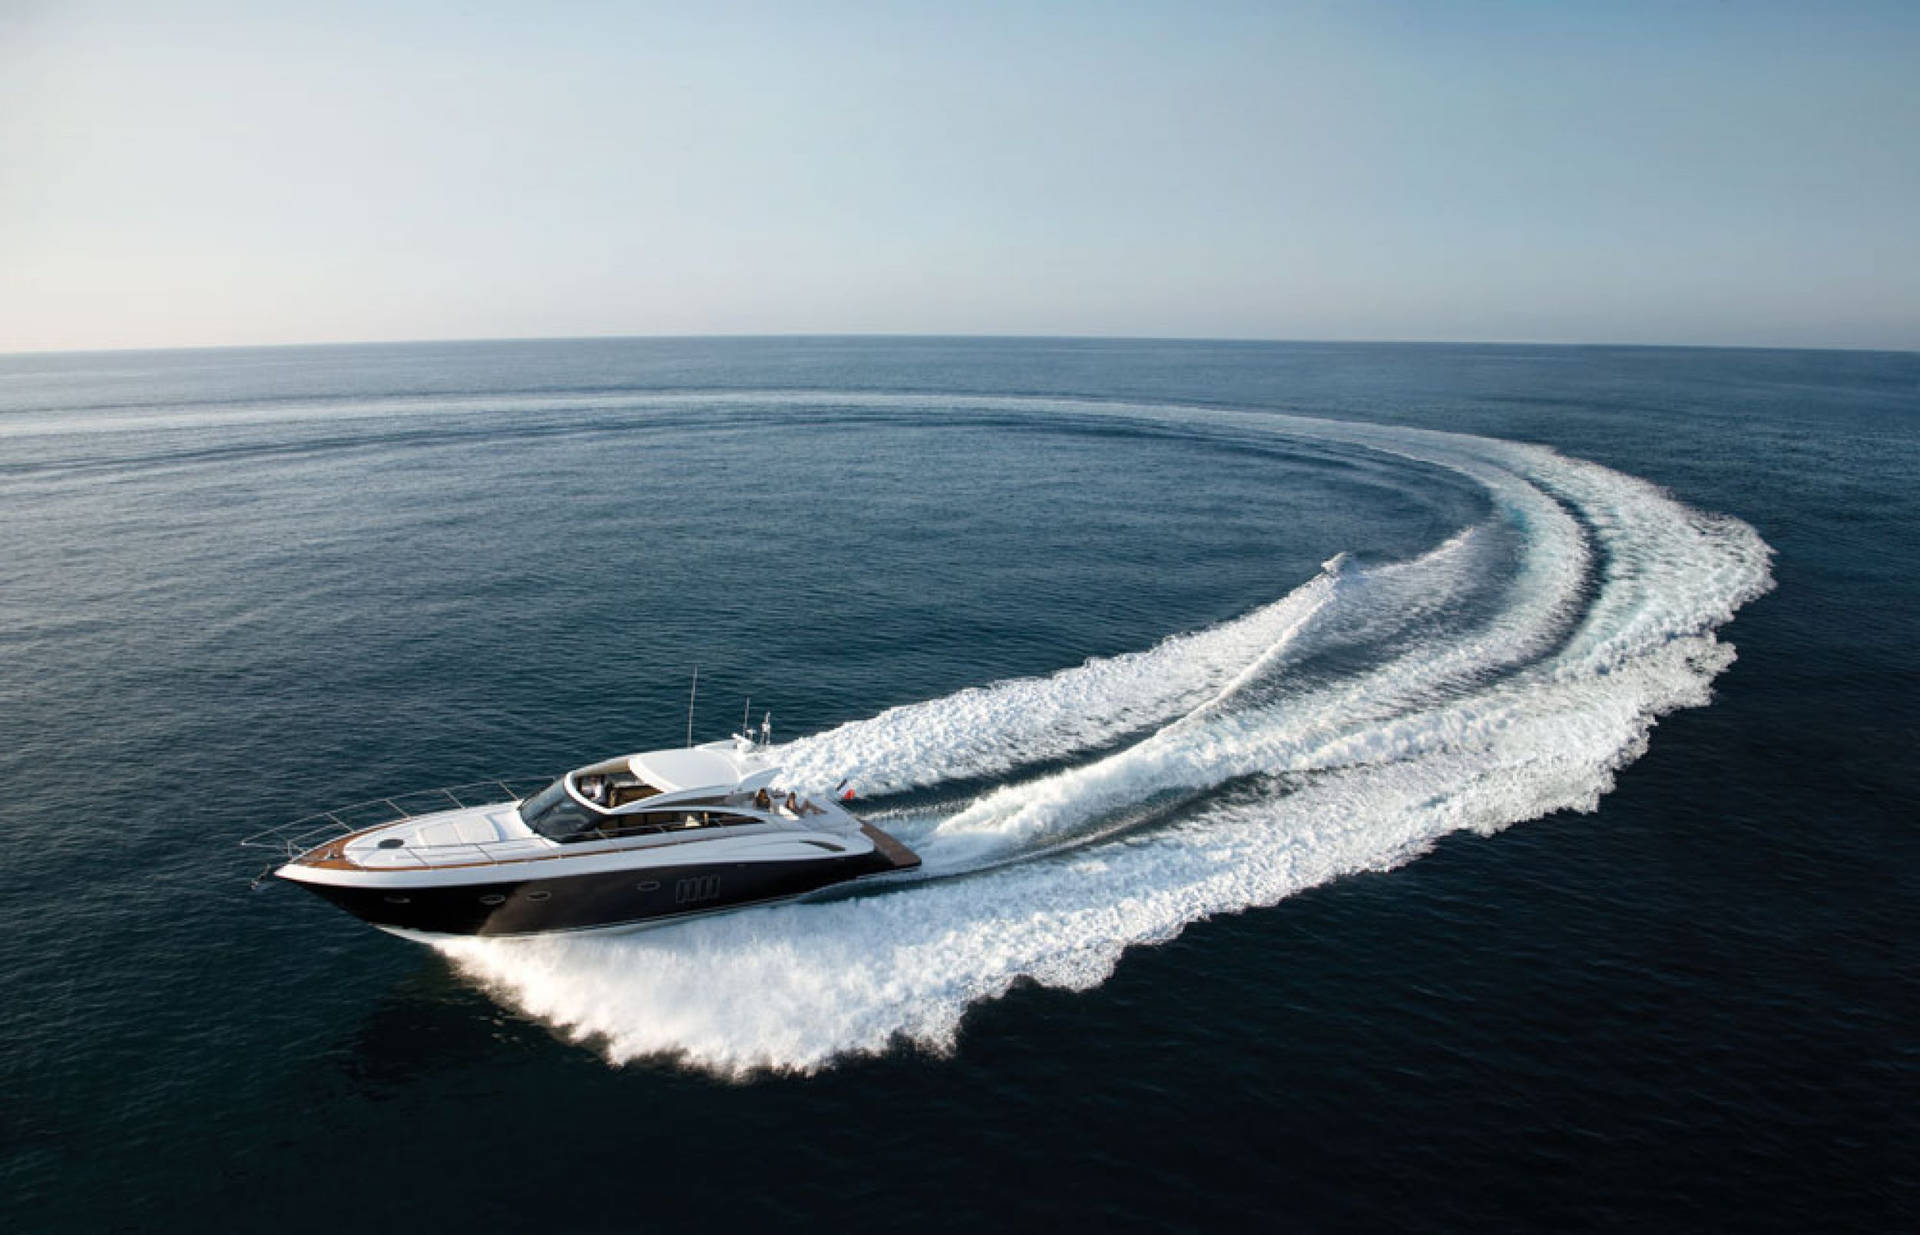 Caption: Elegant Yacht Cutting Through Ocean Waves Wallpaper